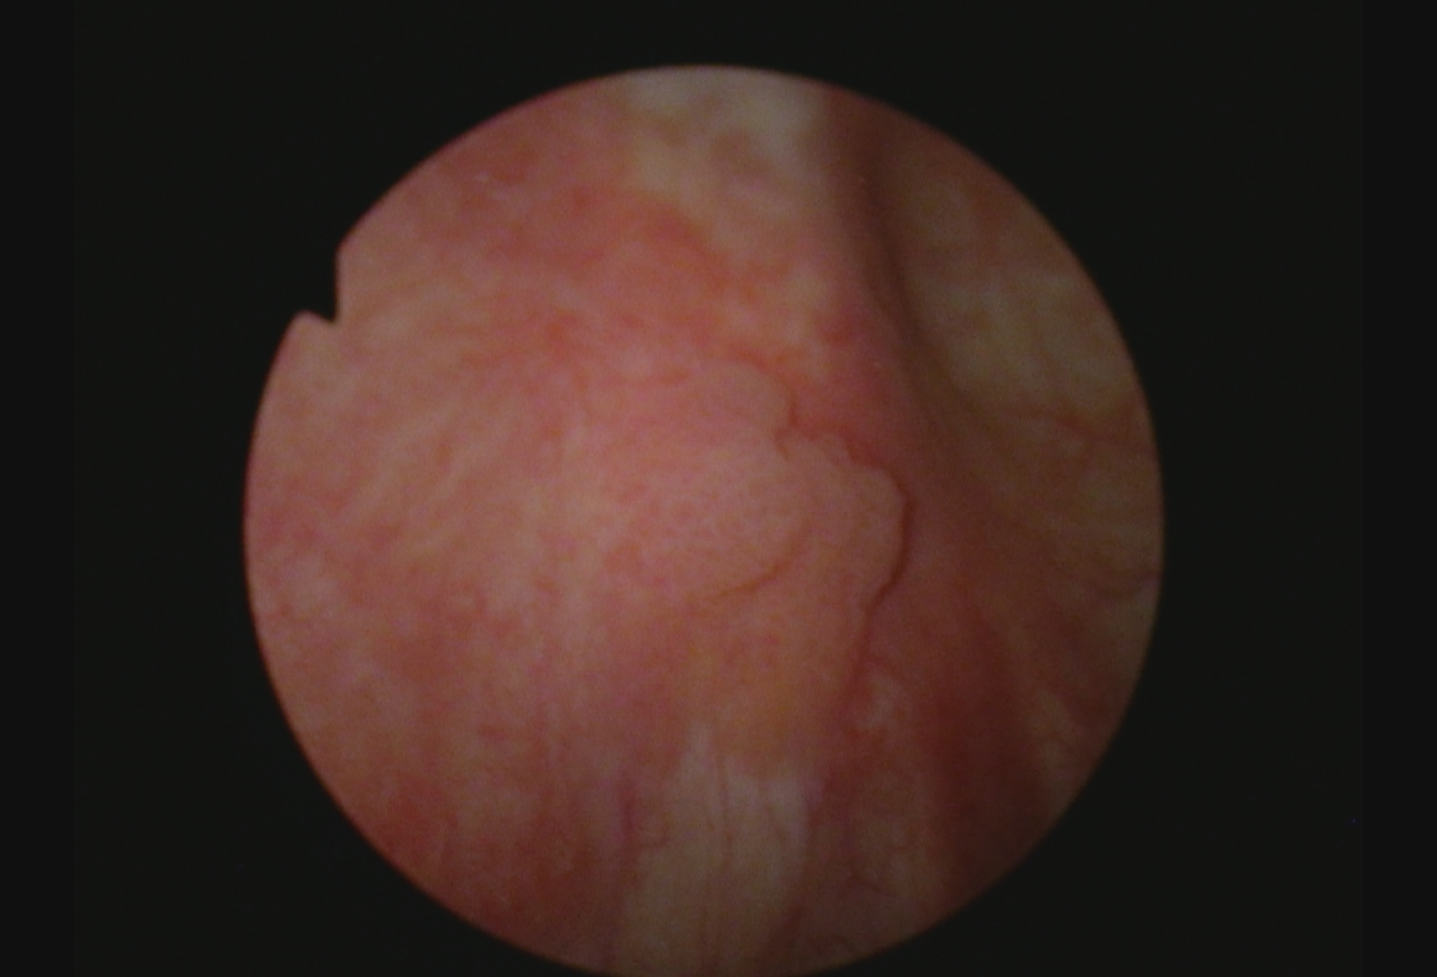 Small papillary tumor.